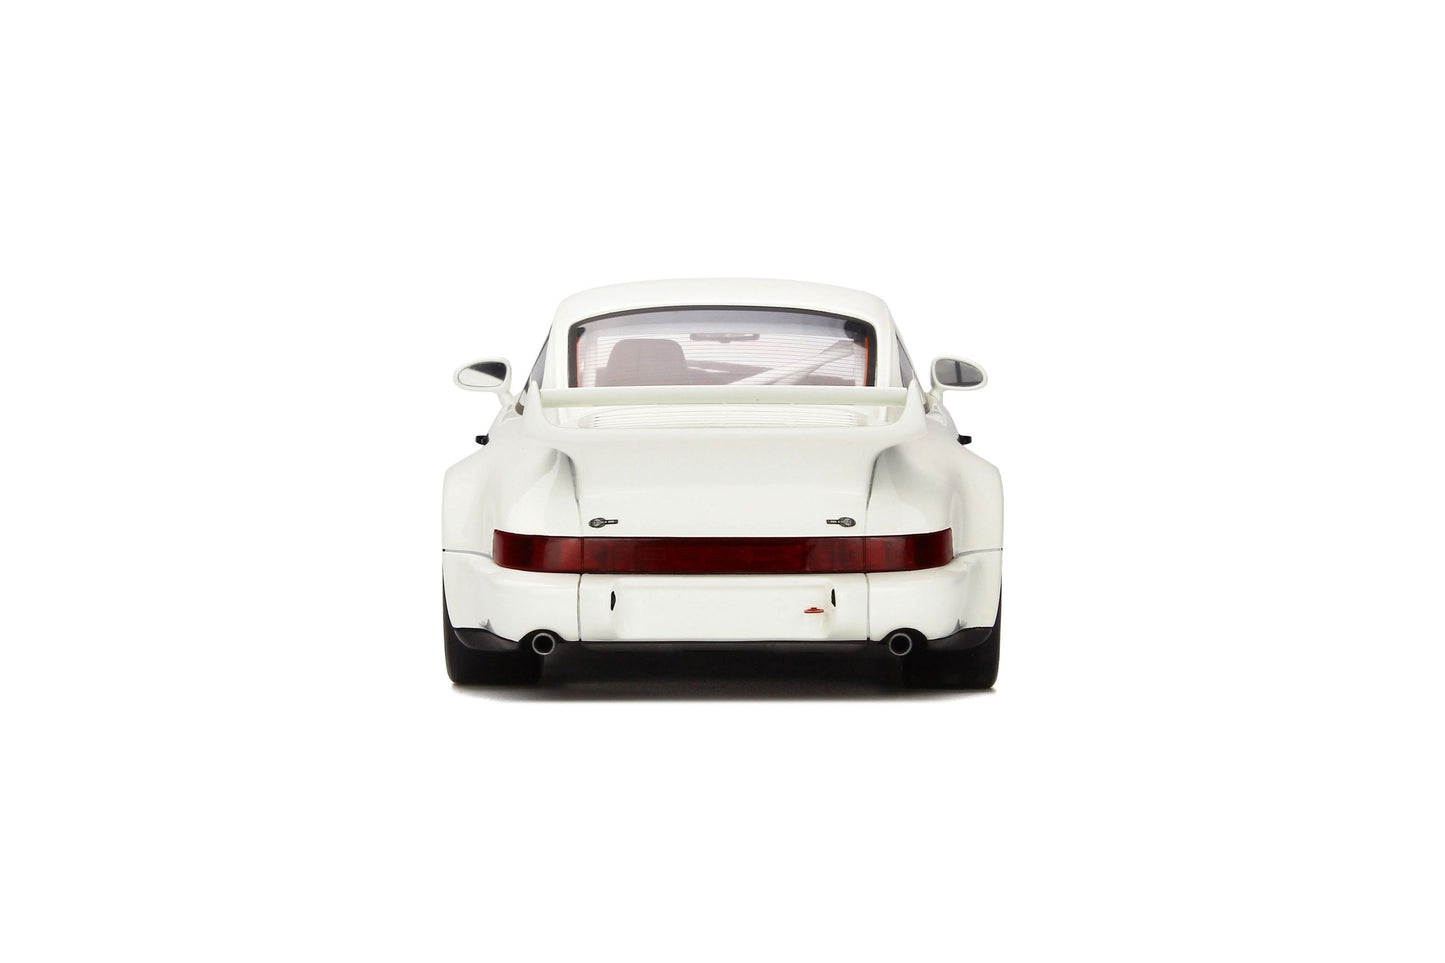 GT Spirit - Porsche 911 RSR (964) (Grand Prix White) 1:18 Scale Model Car